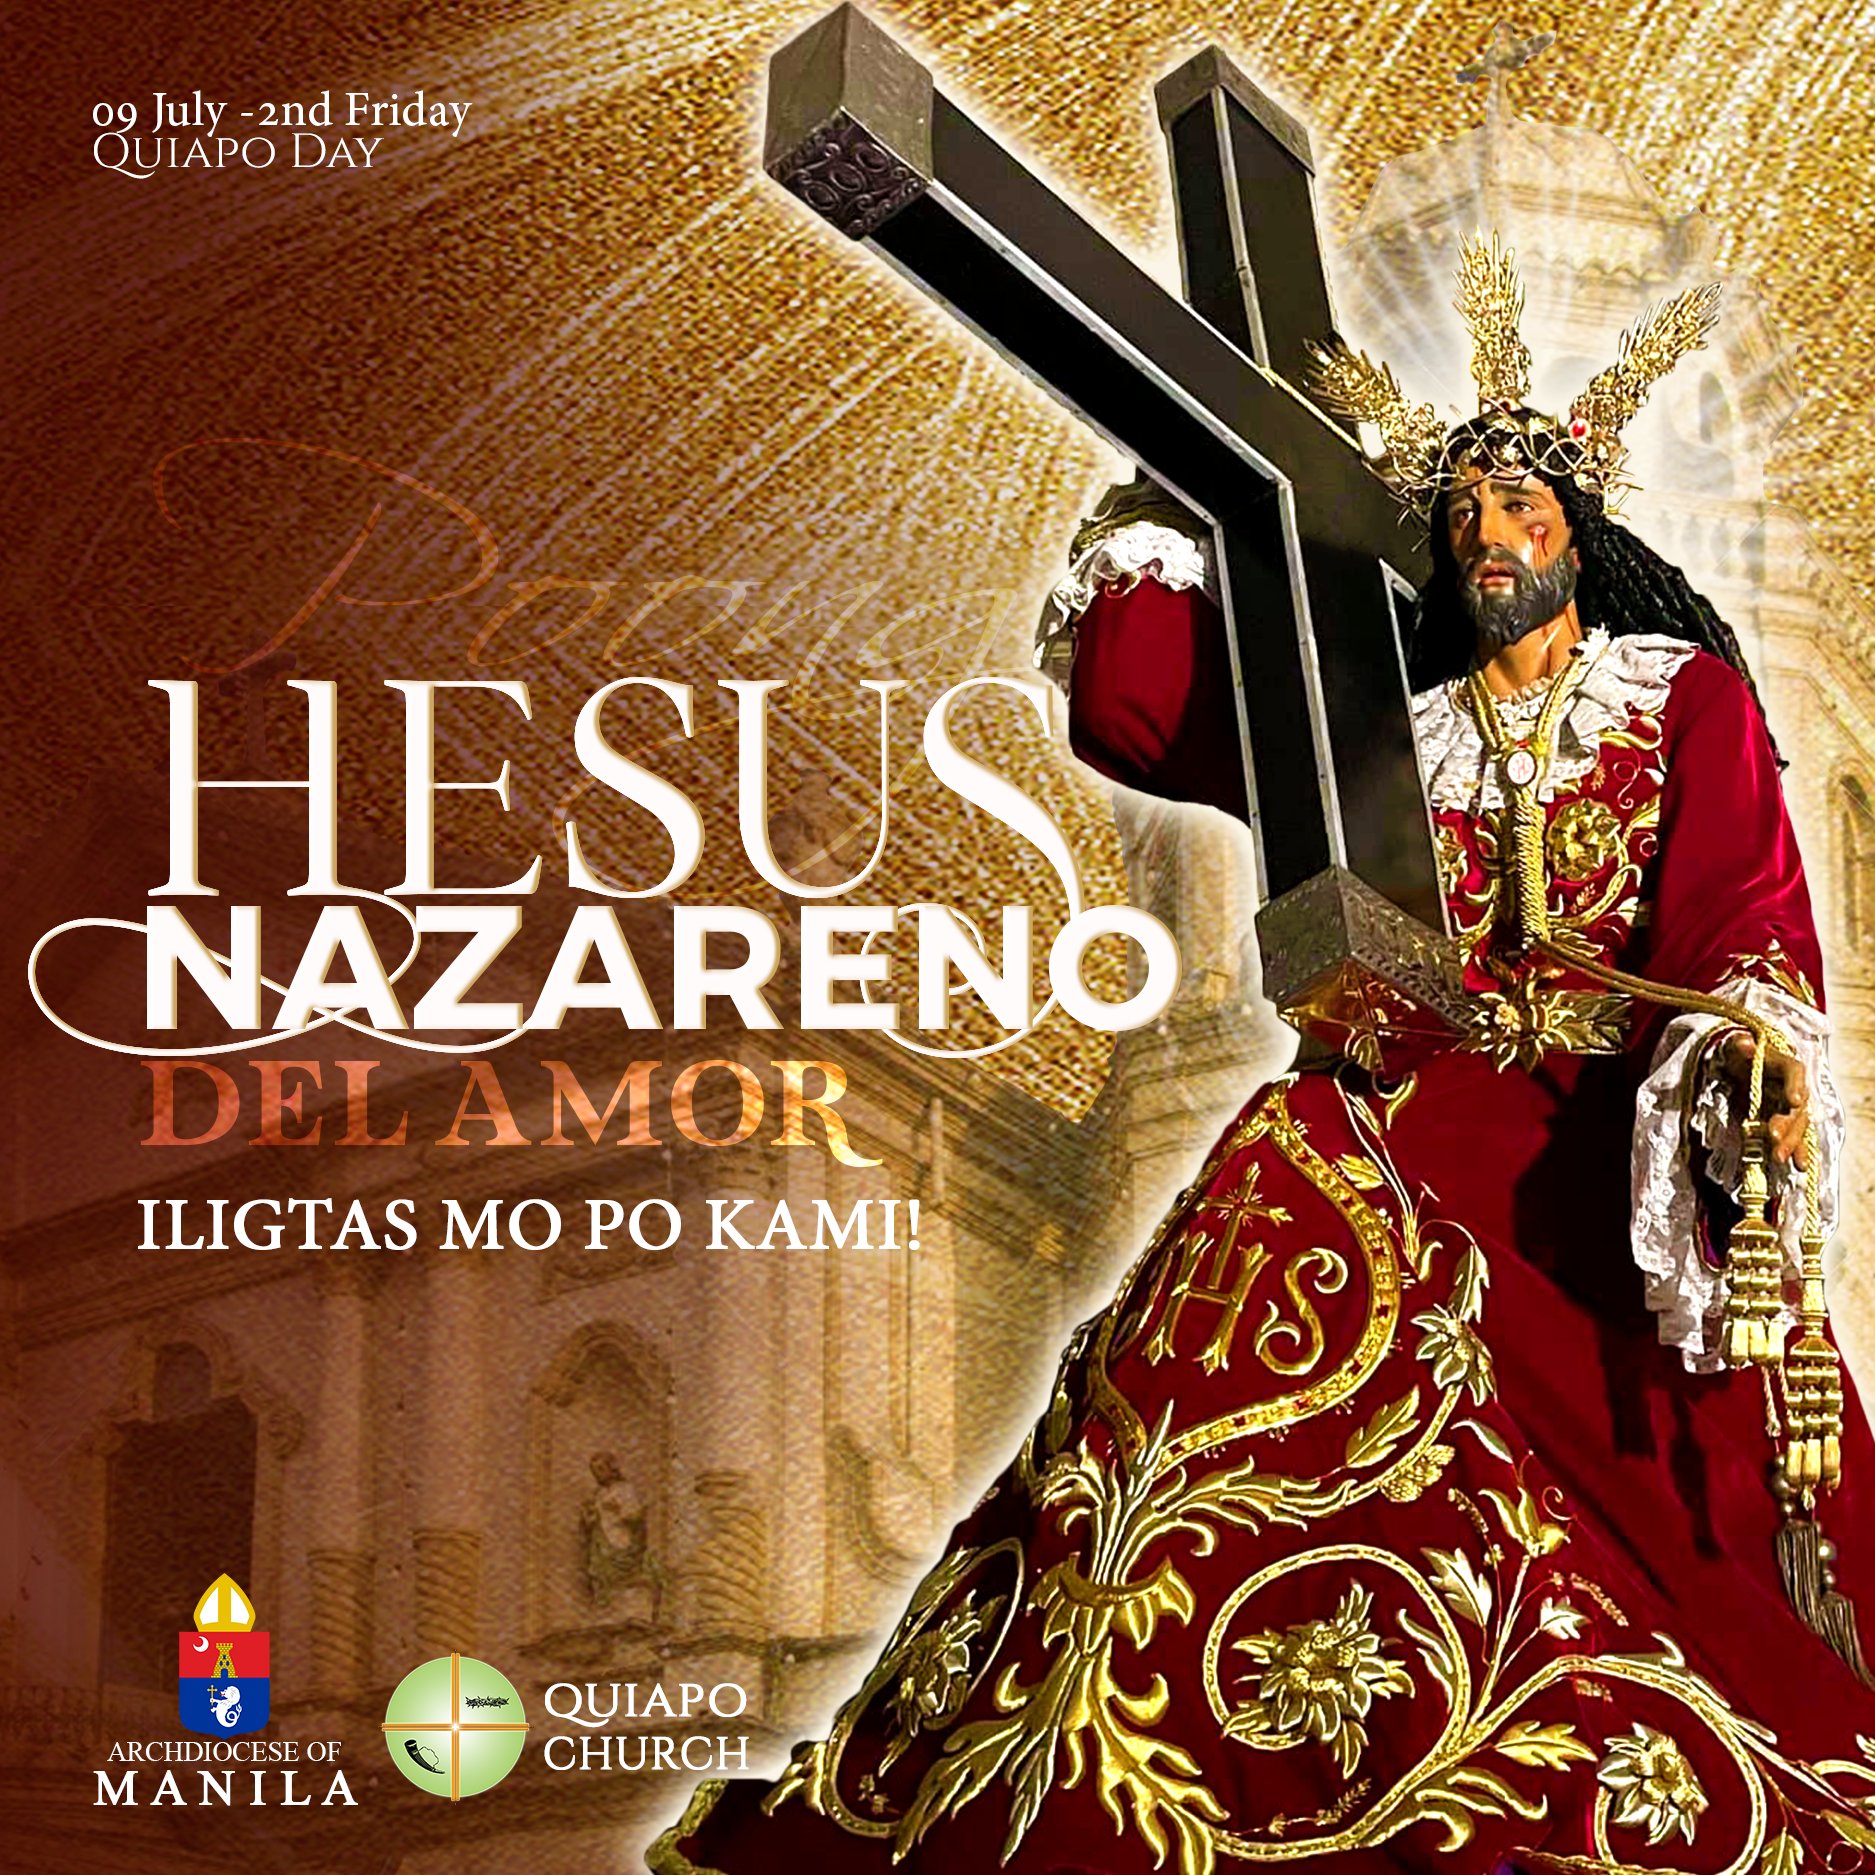 Quiapo Church on Twitter: "Mahal na Poong Hesus Nazareno,#N#iligtas Mo